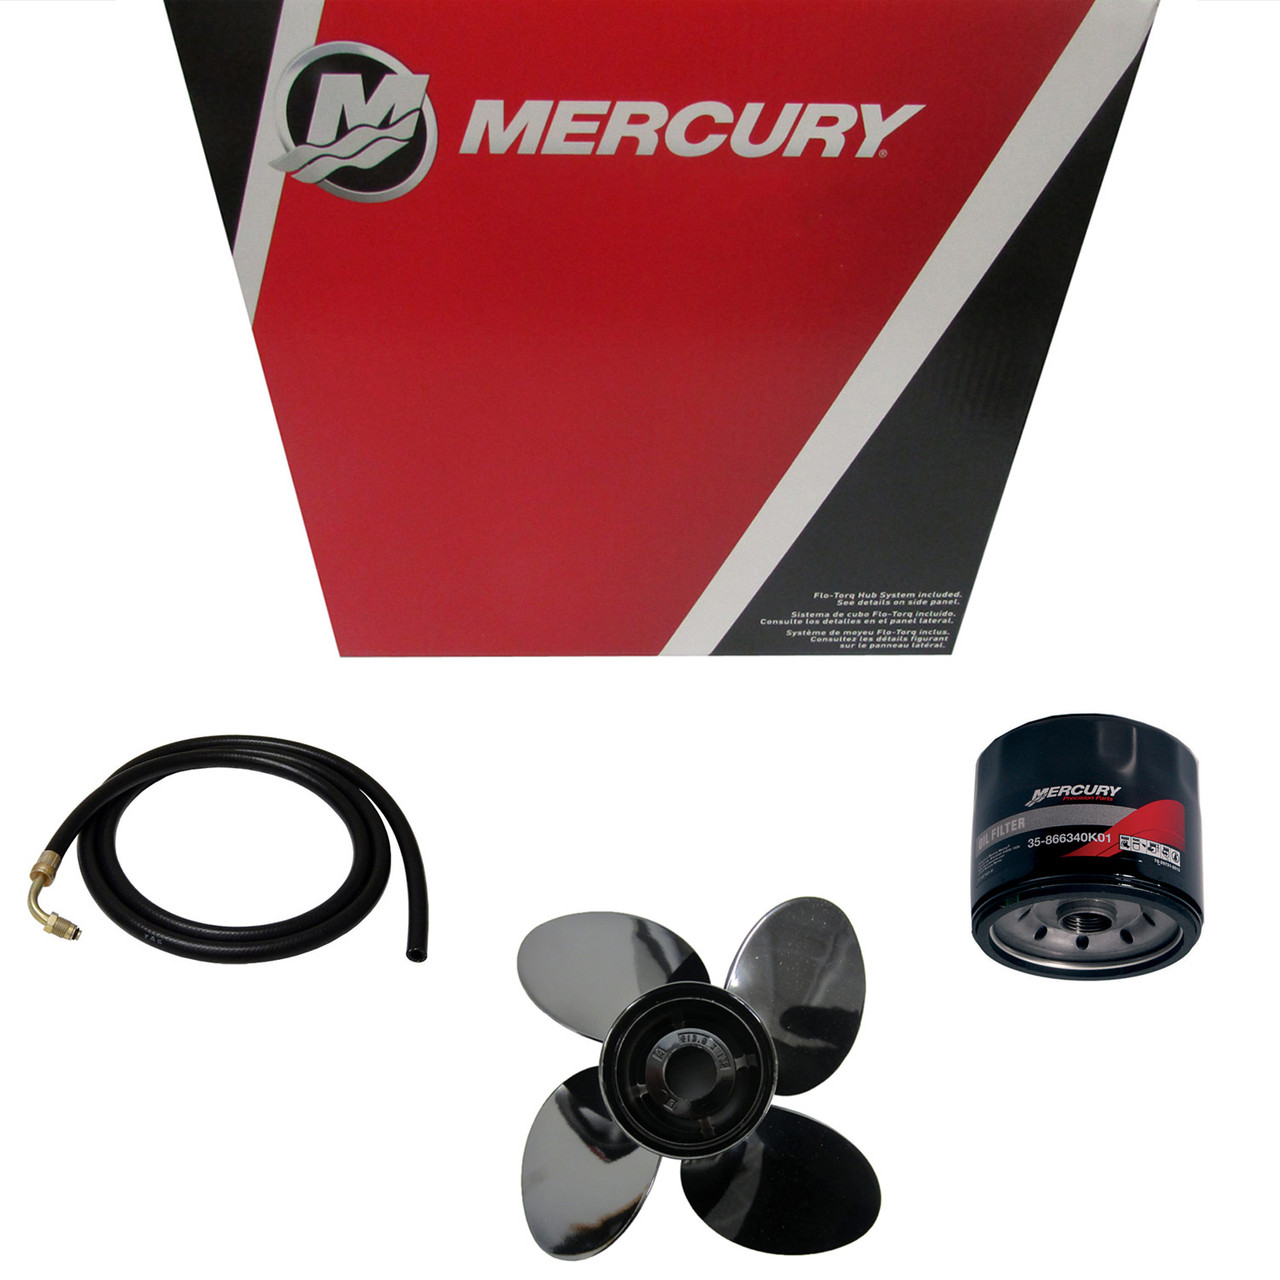 Mercury Marine / Mercruiser New OEM Cd Unit, 803704T01